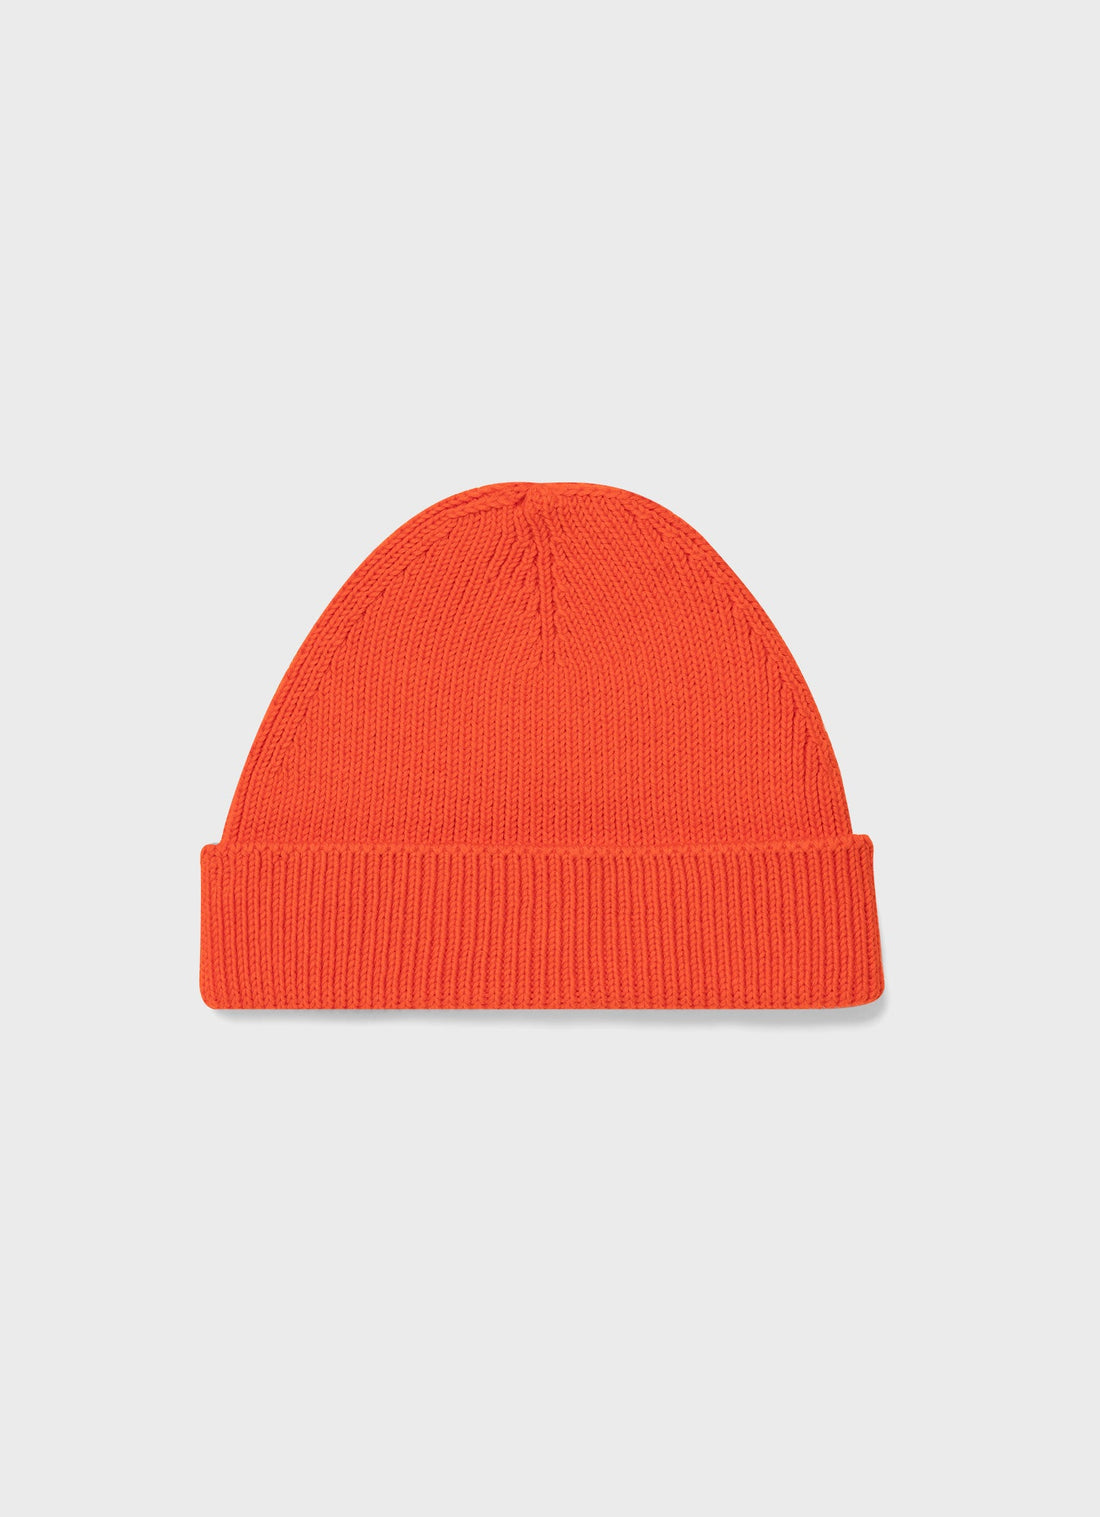 Sunspel x Nigel Cabourn Beanie Hat in Orange